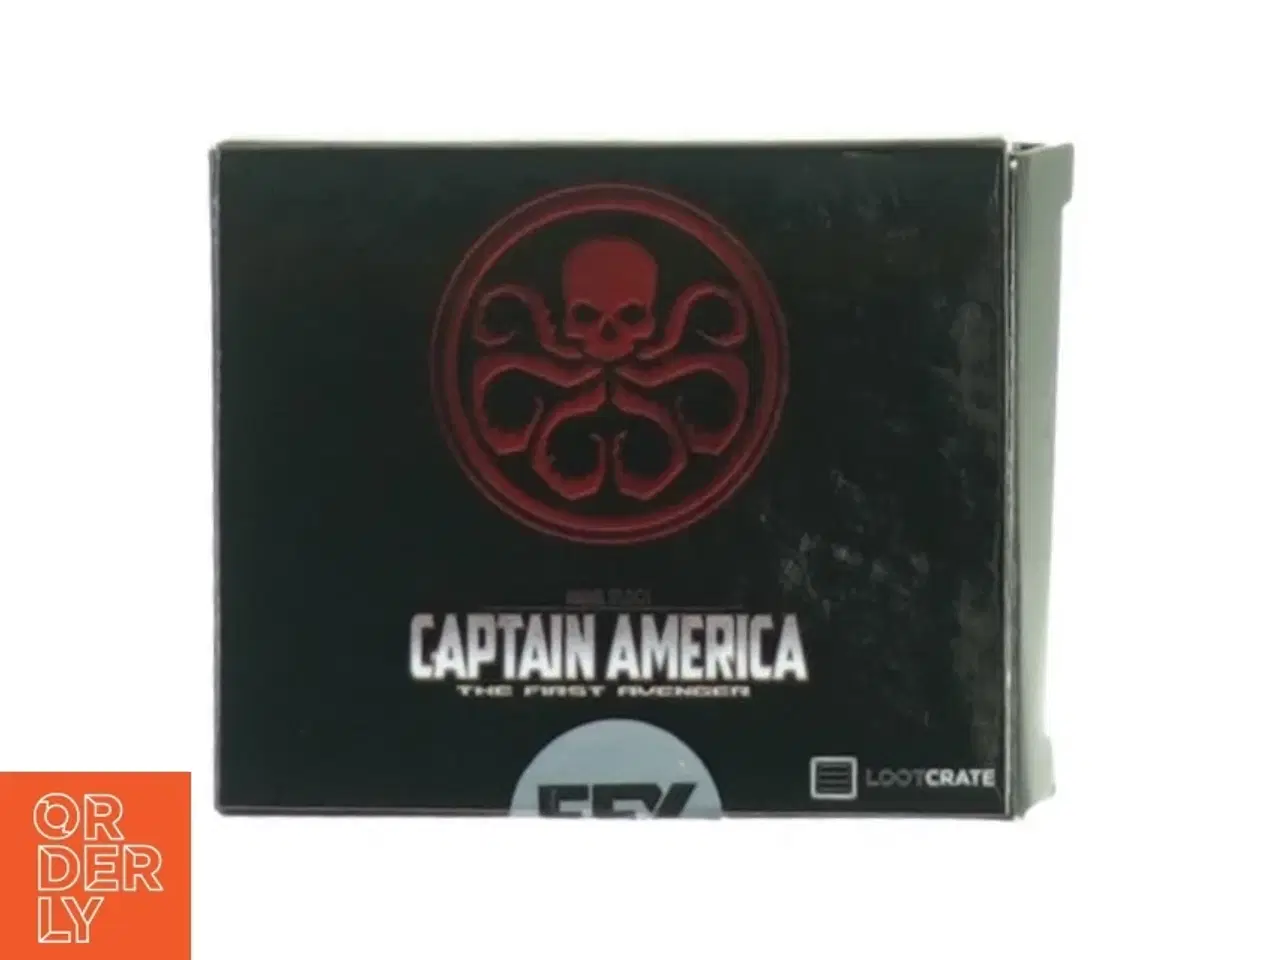 Billede 2 - Captain America Hydra pin - Official prop replica fra Marvel (str. 8 x 6 cm)